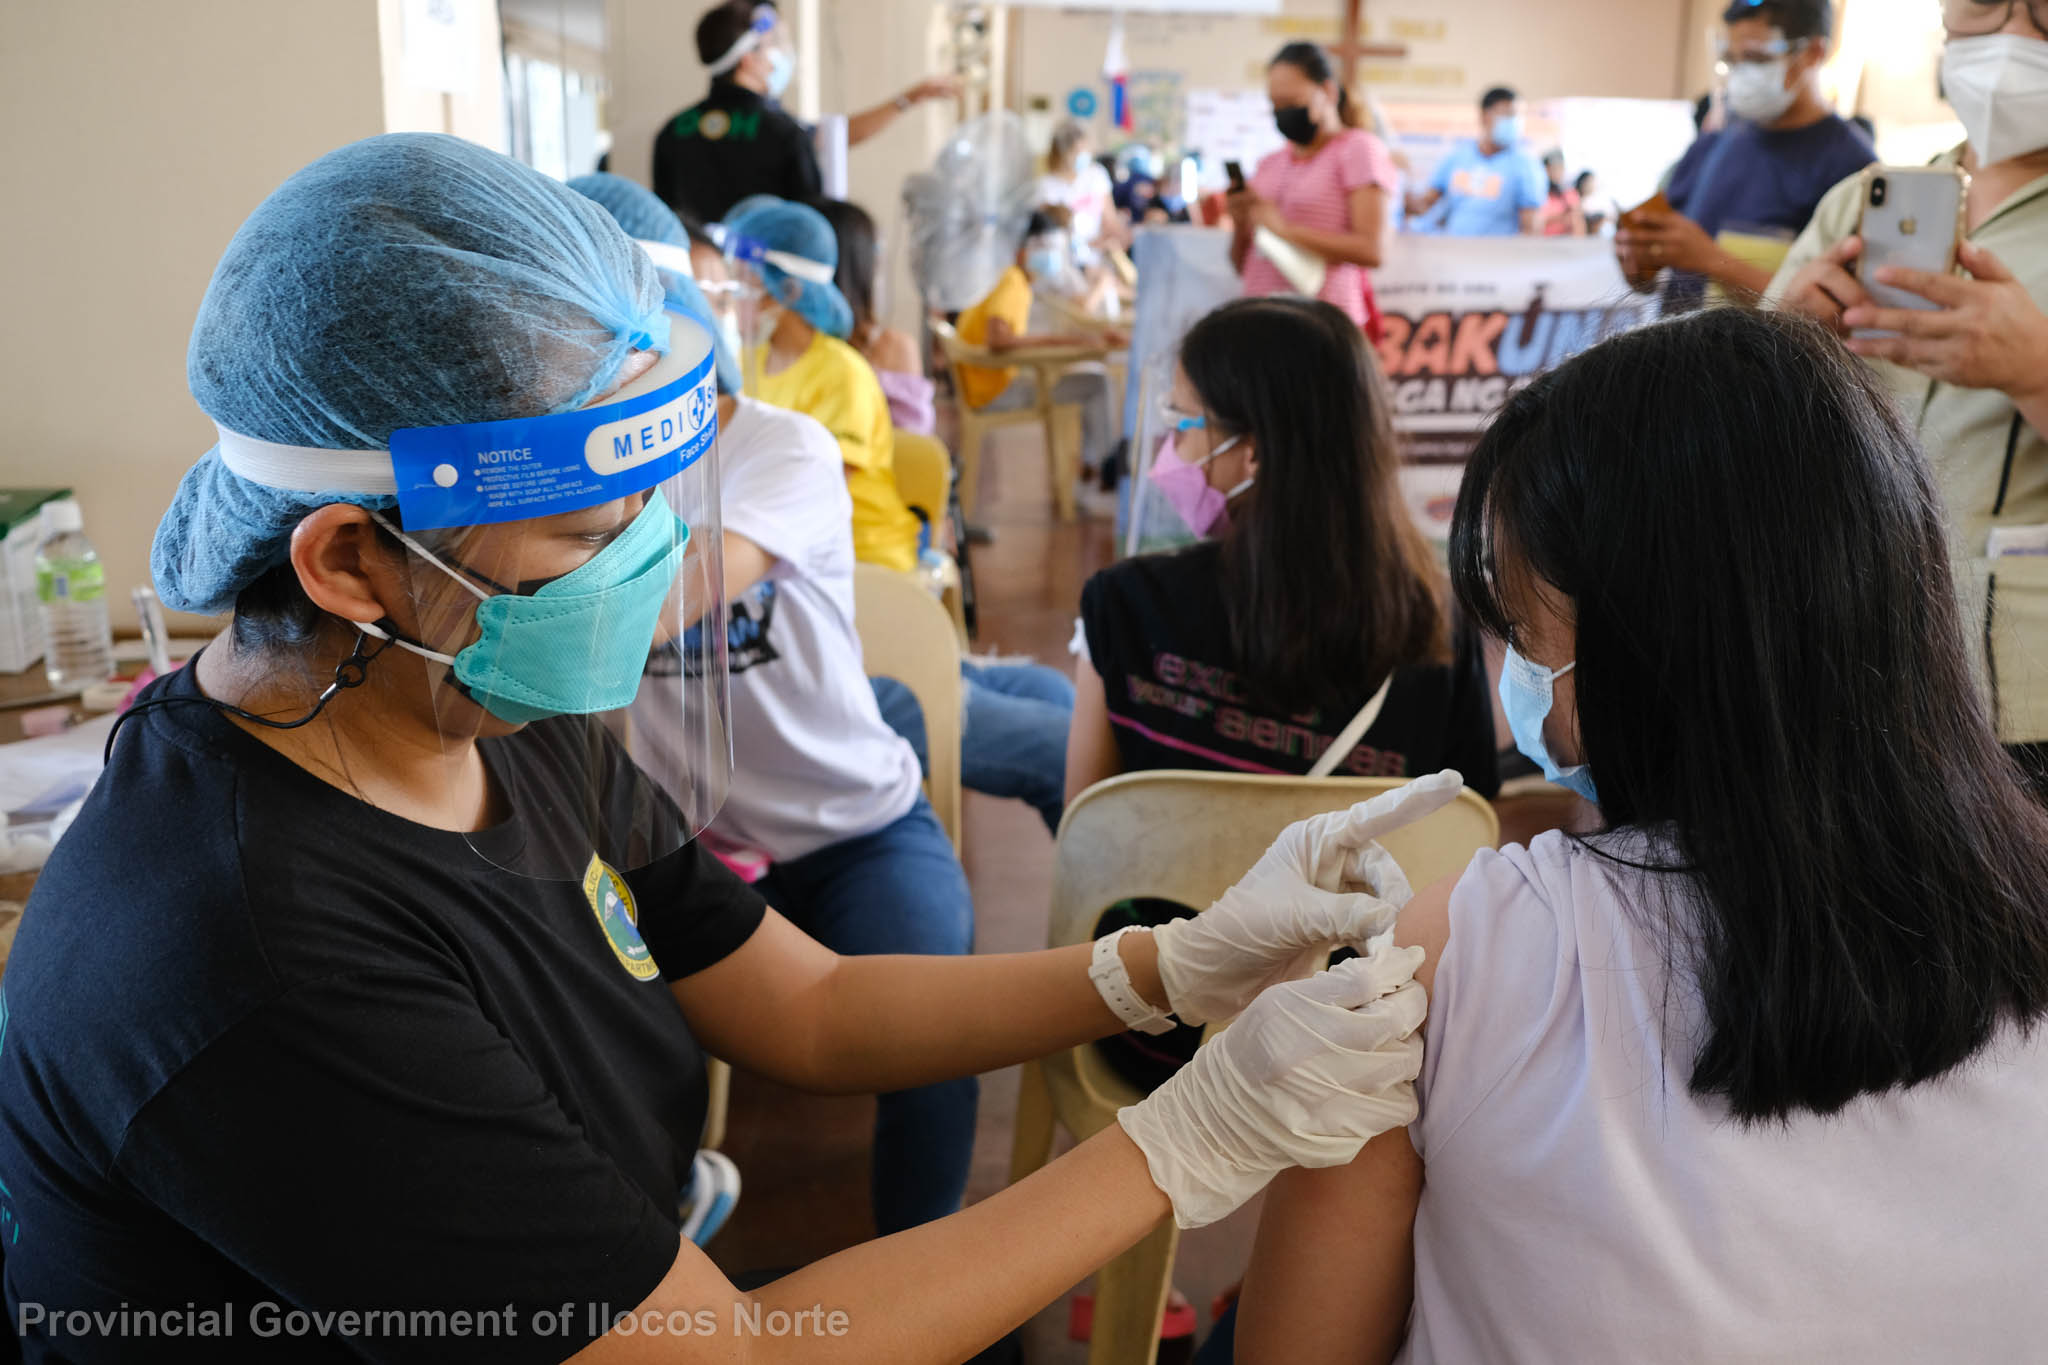 Minors receive COVID-19 vaccines at a facility in Ilocos Norte province